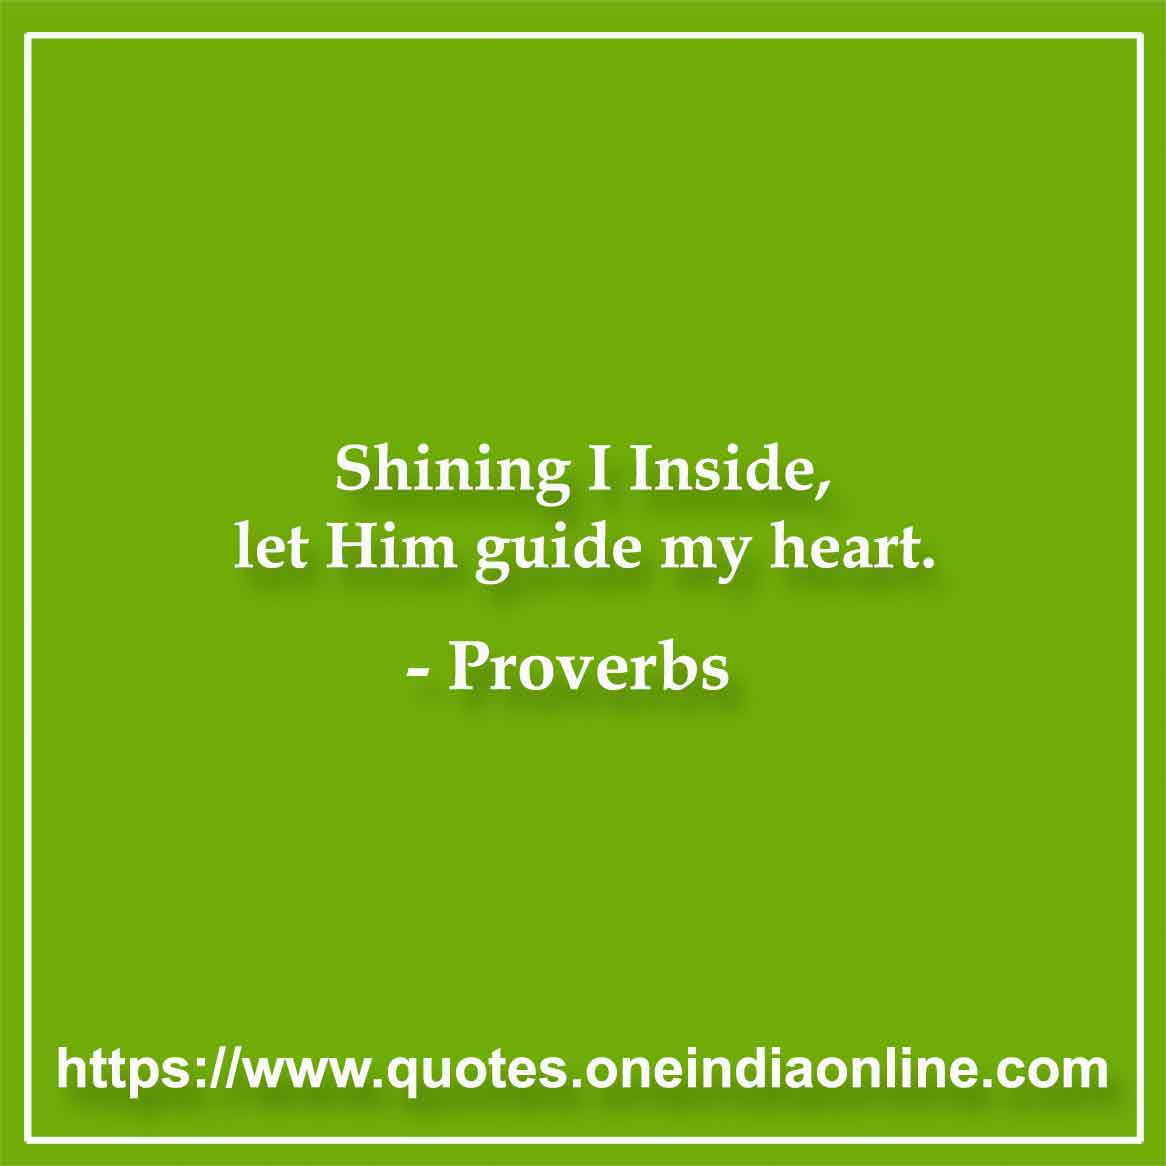 Shining I Inside, let Him guide my heart.

Egyptian 